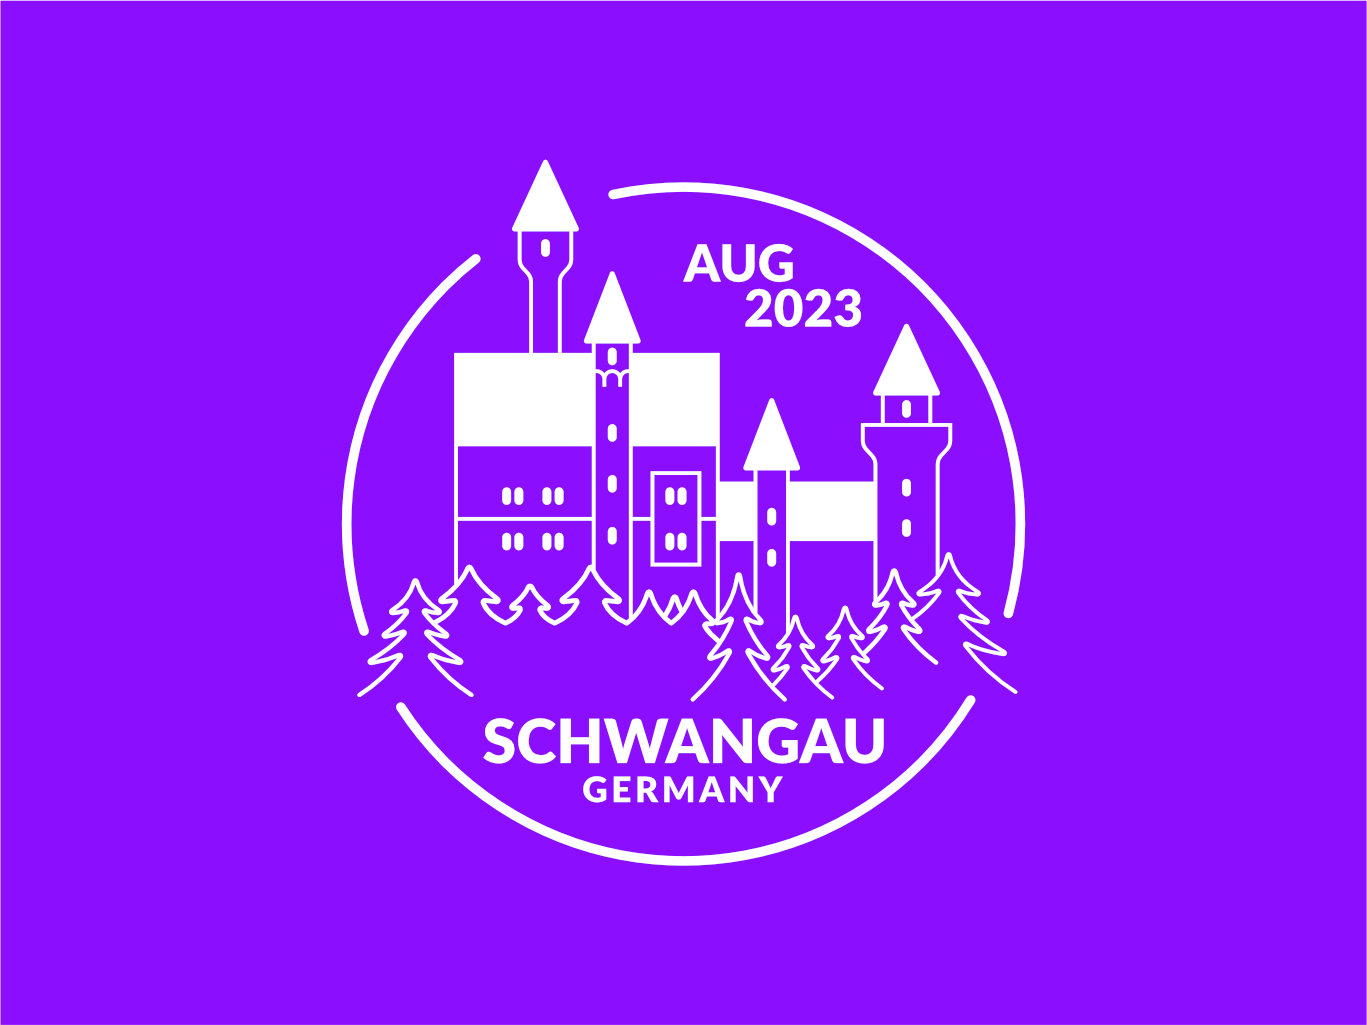 Passport style stamp for Schwangau